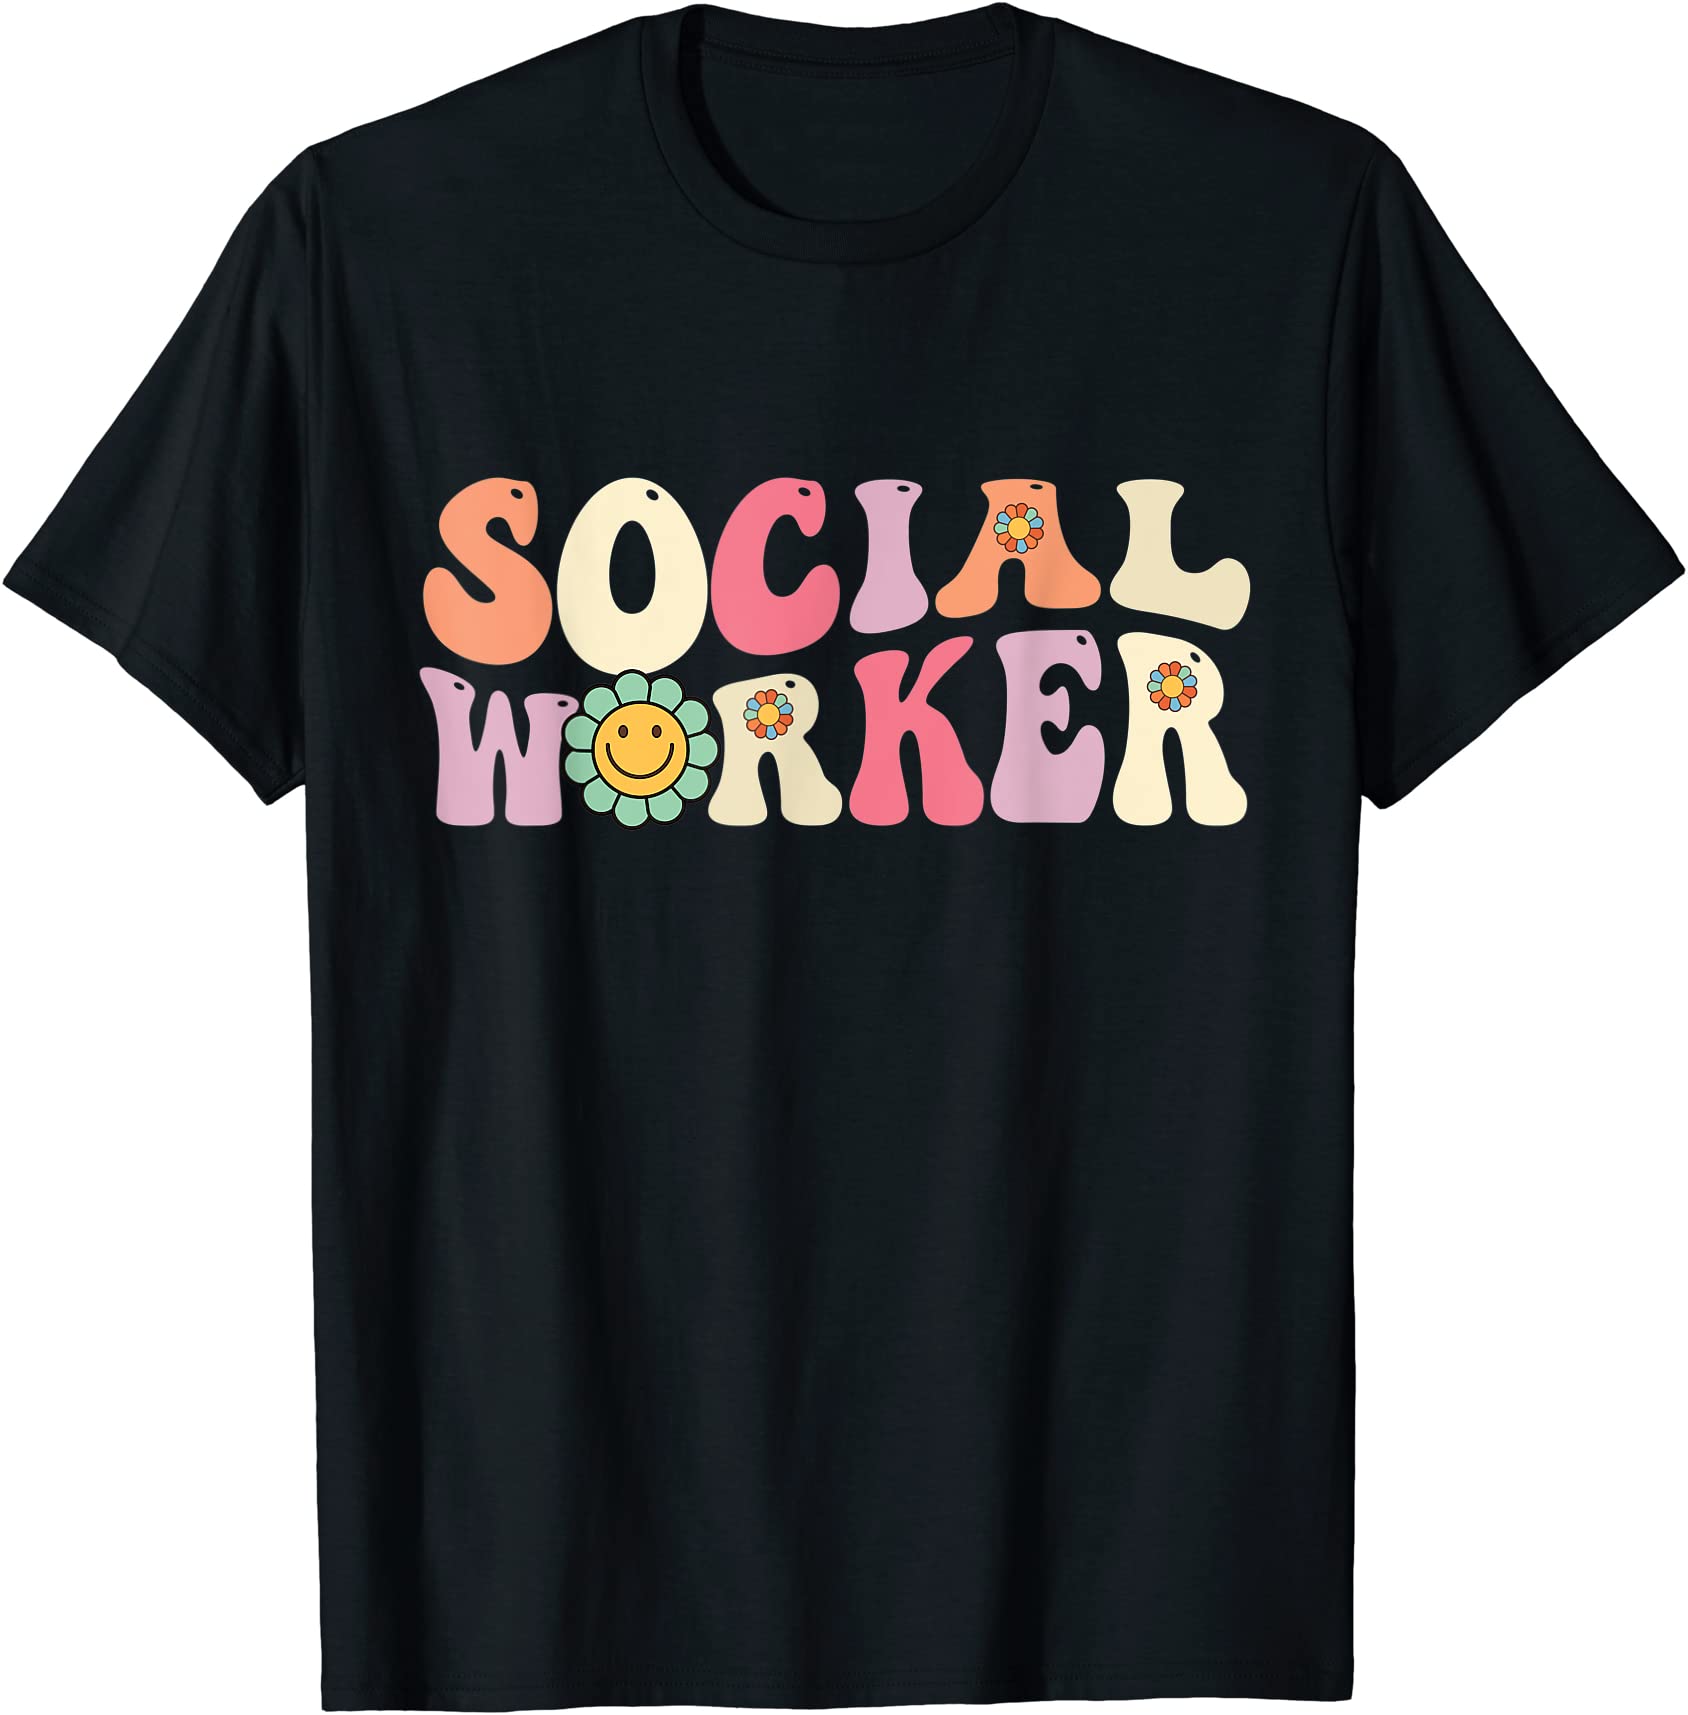 social worker groovy retro vintage 60s 70s design t shirt men - Buy t ...